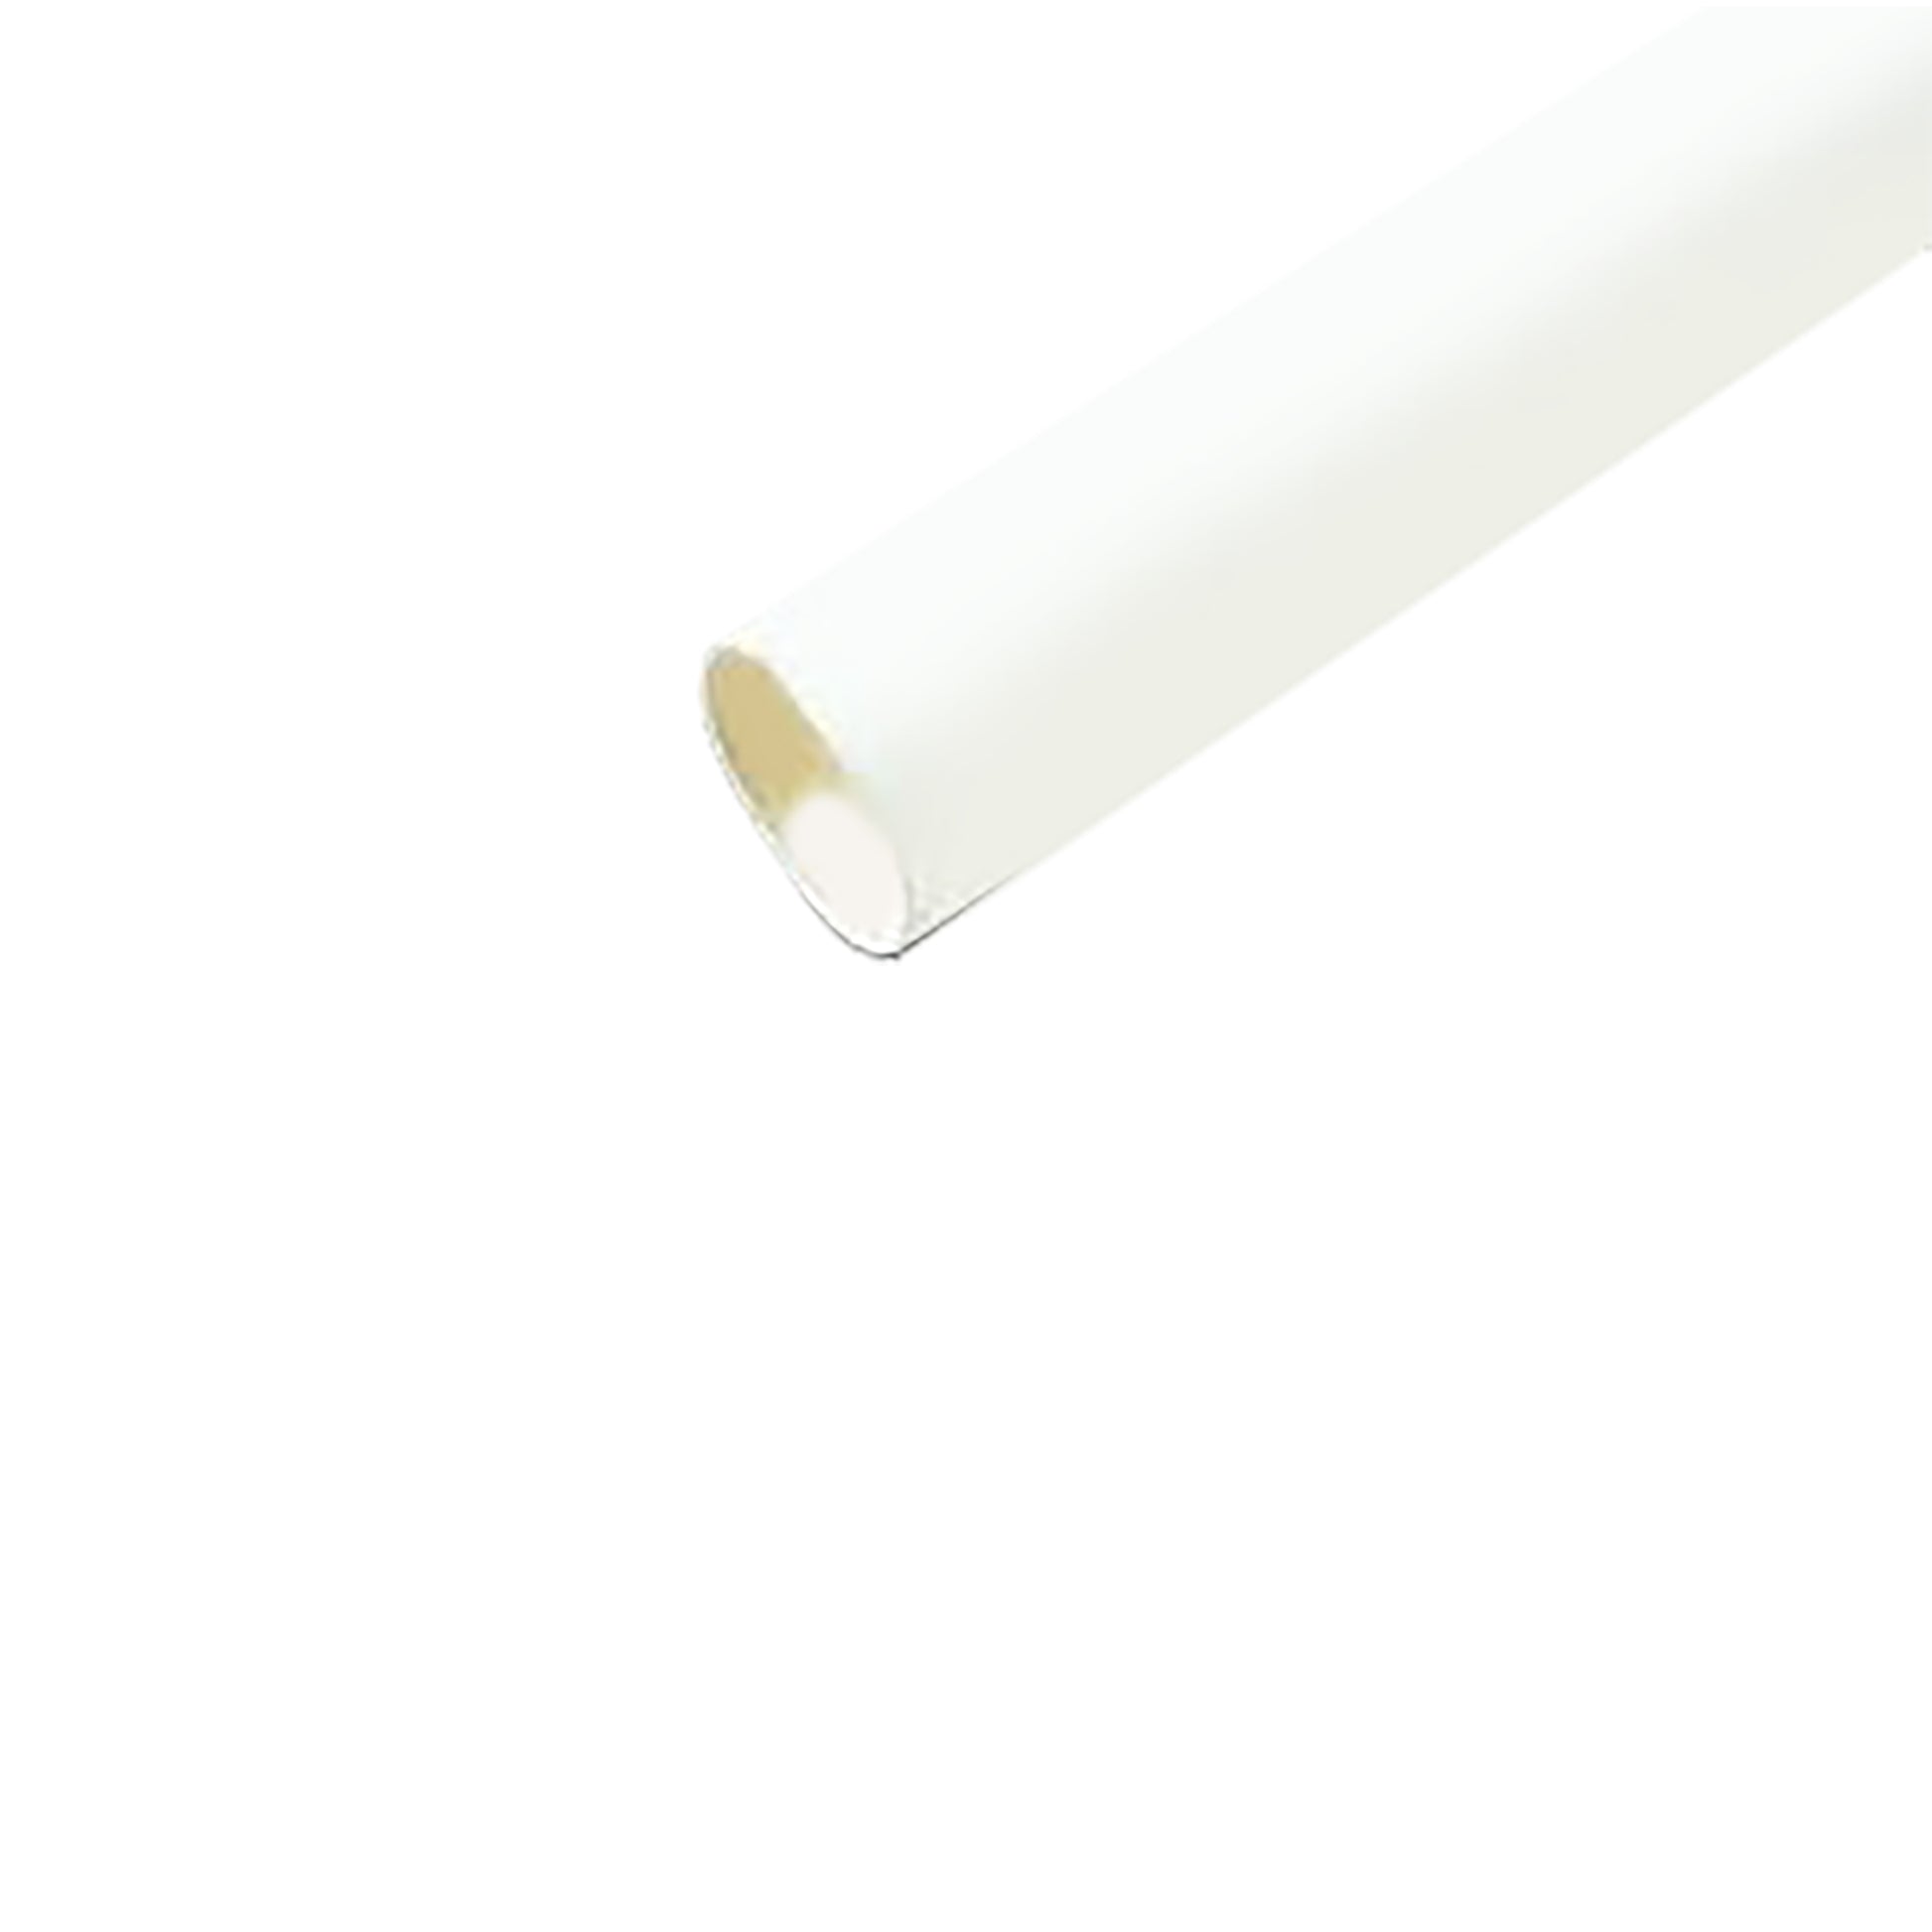 Flexible Thin Single Wall Non-Adhesive Heat Shrink Tubing 2:1 White 1/8" ID - 25' Ft Spool